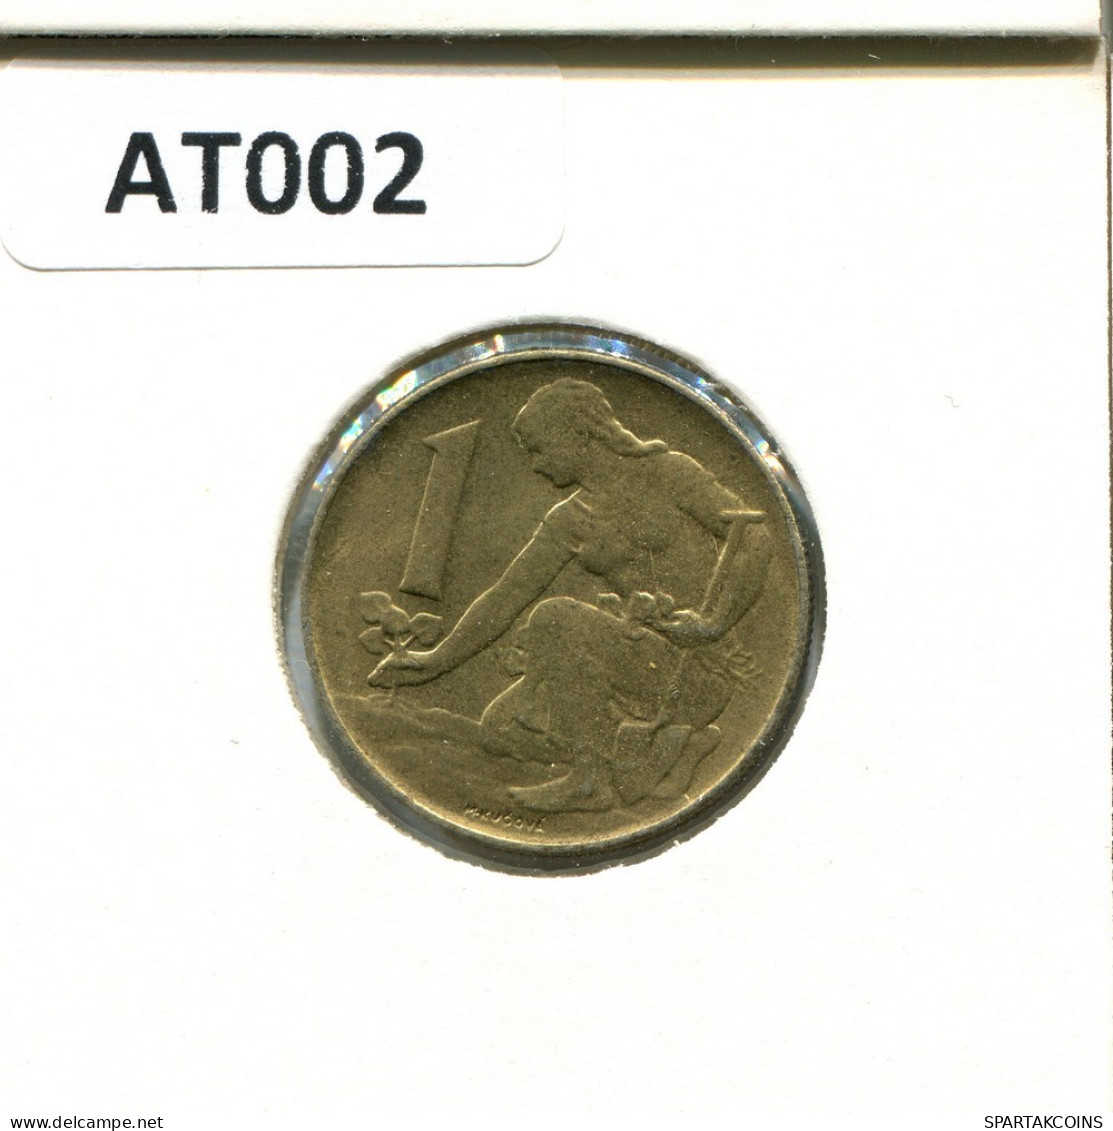 1 KORUNA 1992 CZECHOSLOVAKIA Coin #AT002.U.A - Tchécoslovaquie